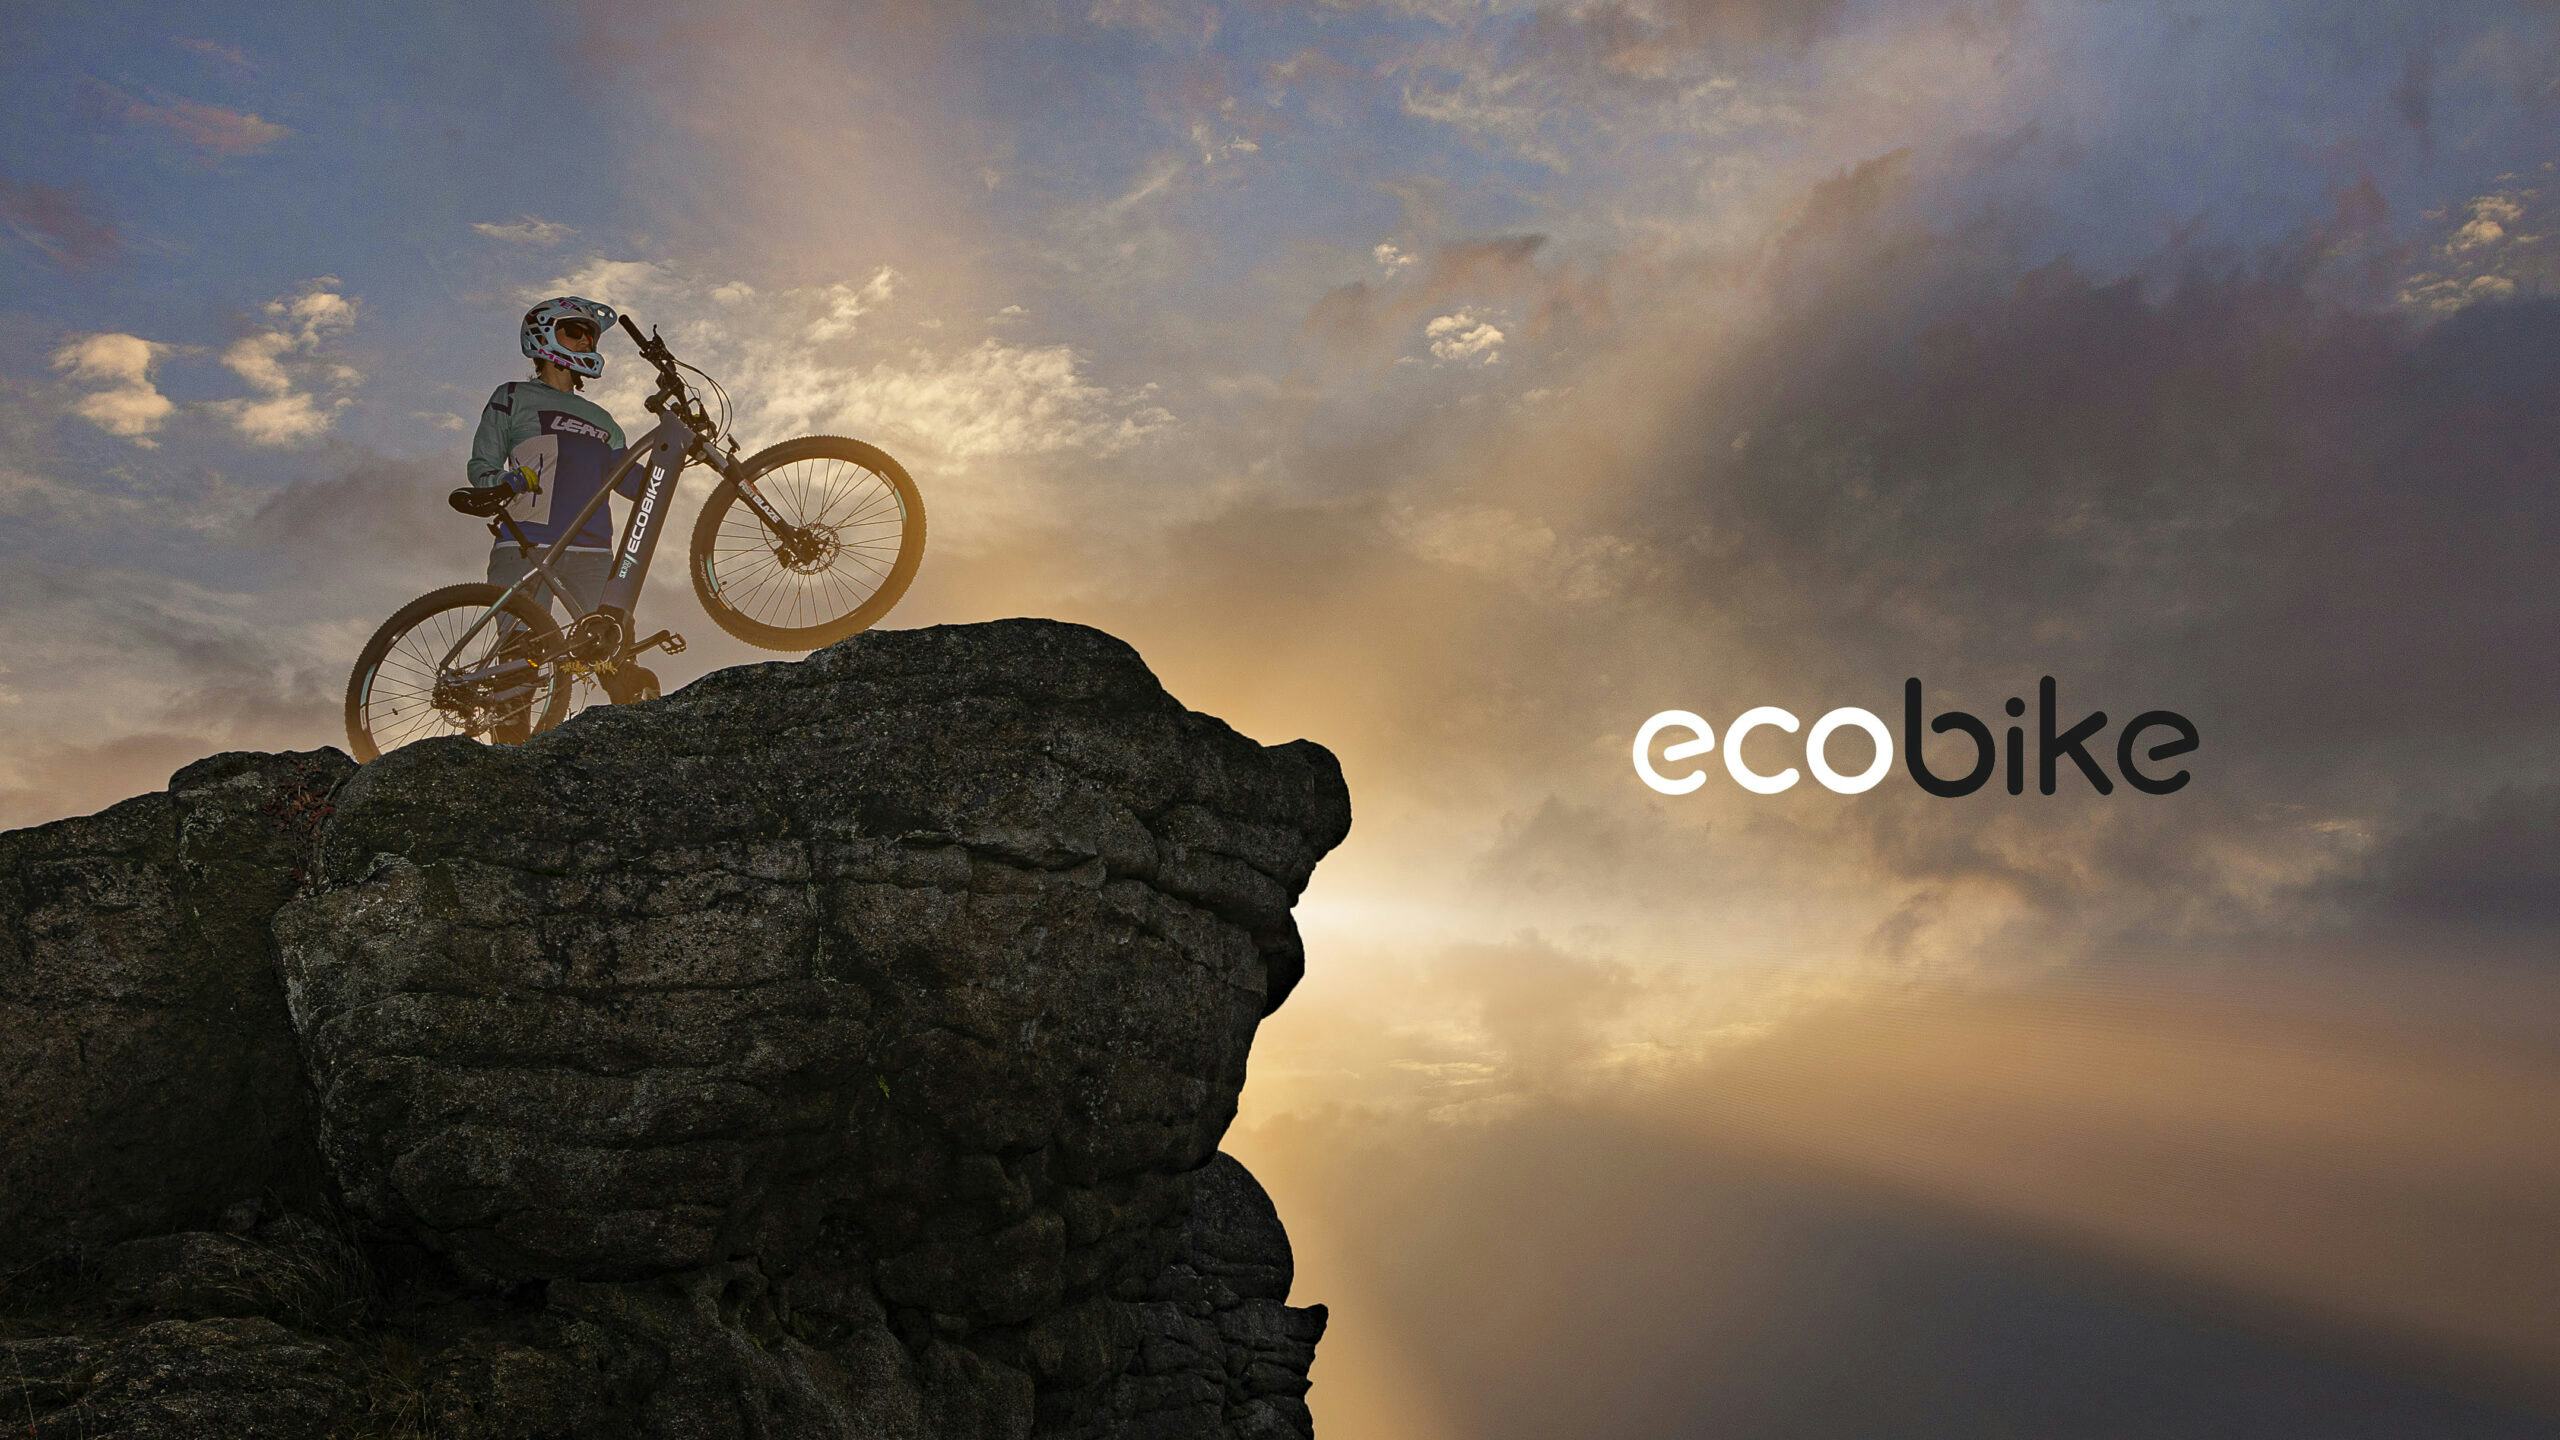 Ecobike: Poland’s e-bike manufacturing experience